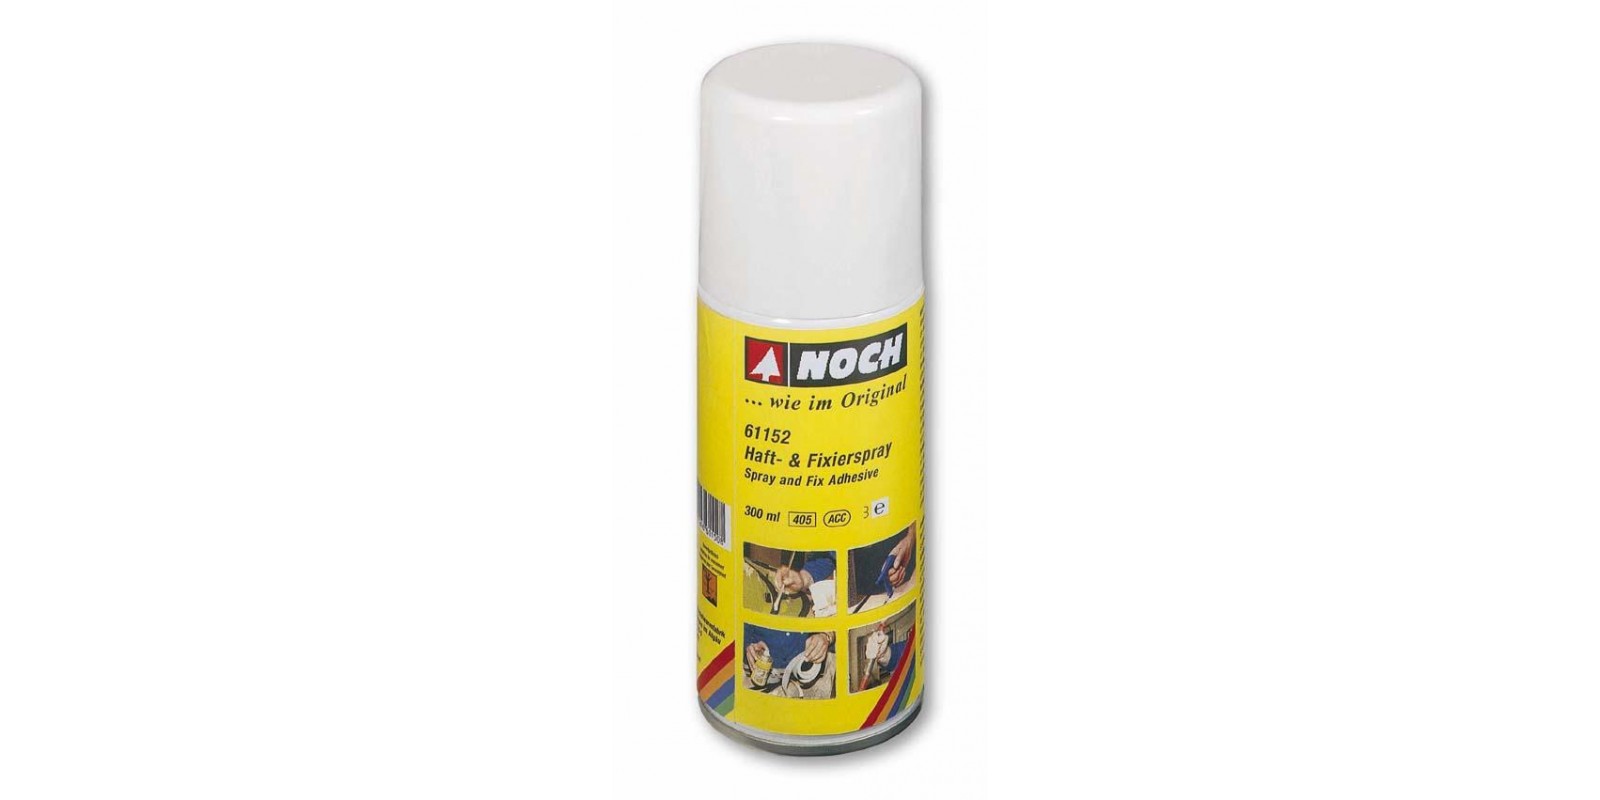  No61152 Spray & Fix Adhesive, 200 ml 